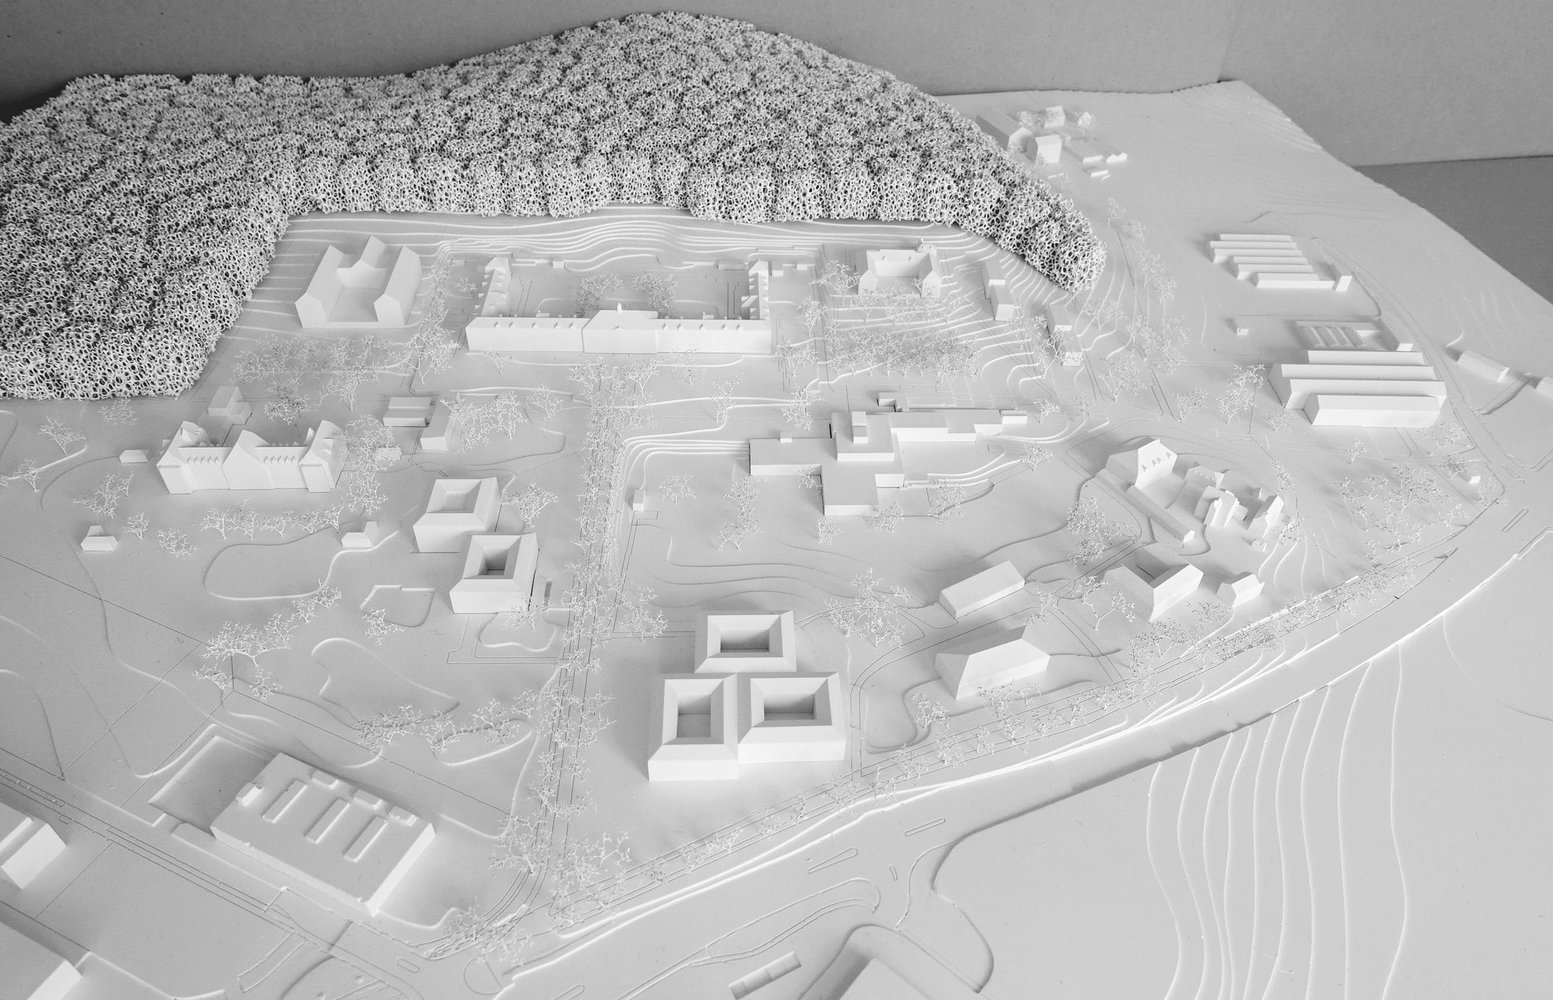 07.03.2023 1. Rang UPD Campus Bolligenstrasse Bern Ideenstudie Städtebau (Areal_a gerade etwas heller.jpg)